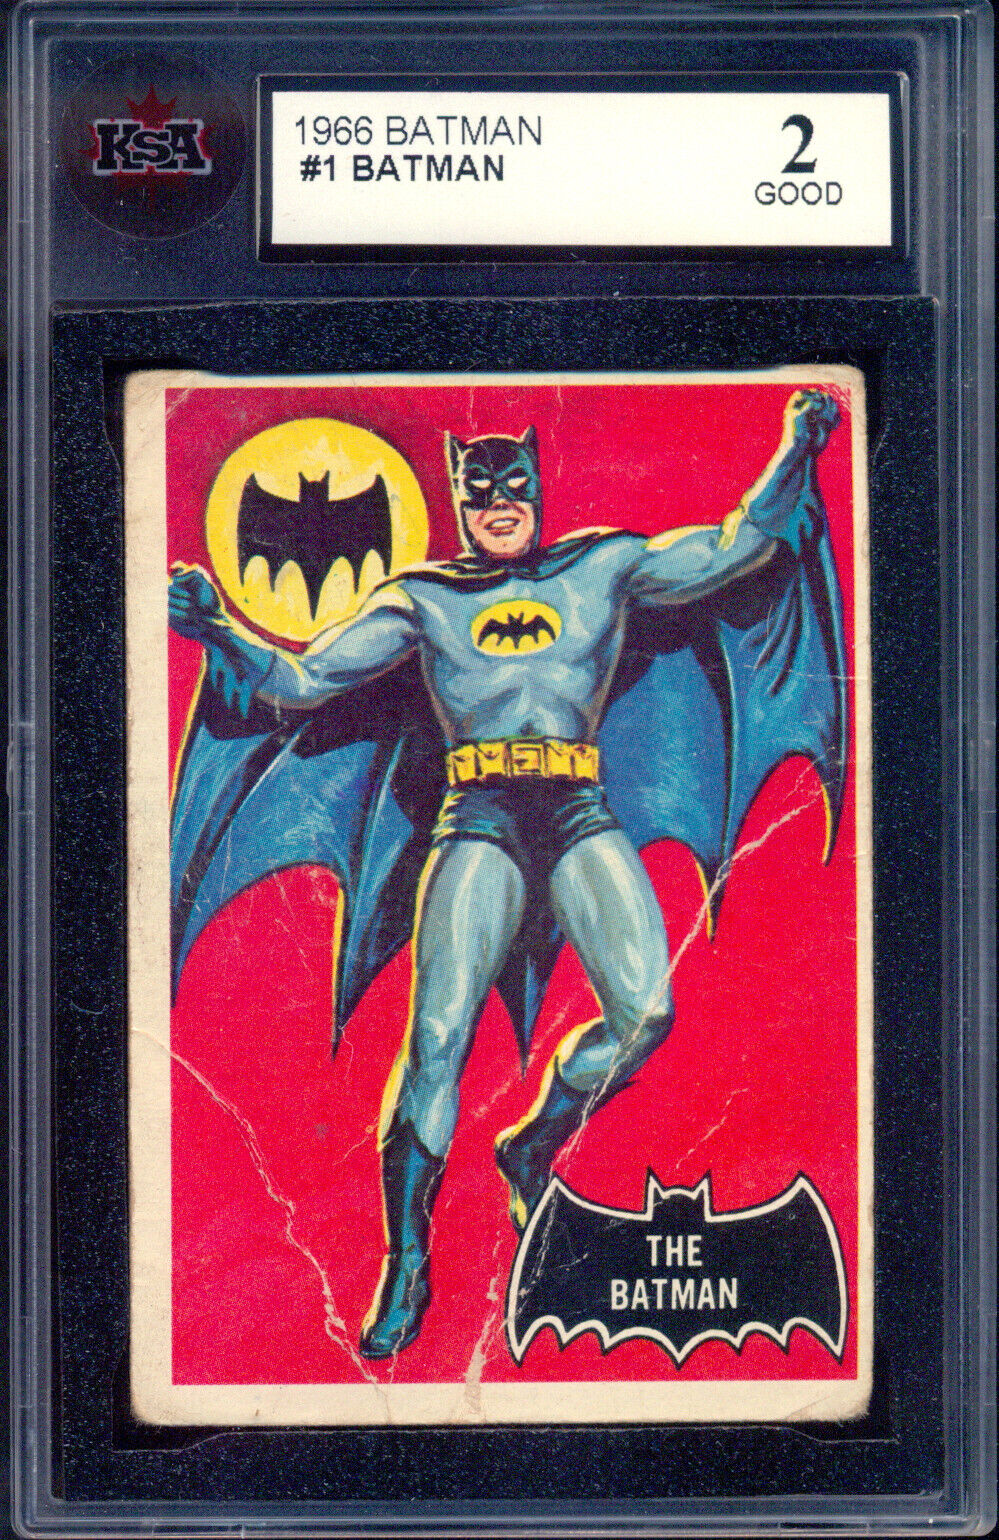 1966 Topps USA Black Bat Batman #1 THE BATMAN Rookie Card Graded KSA 2 Good RC